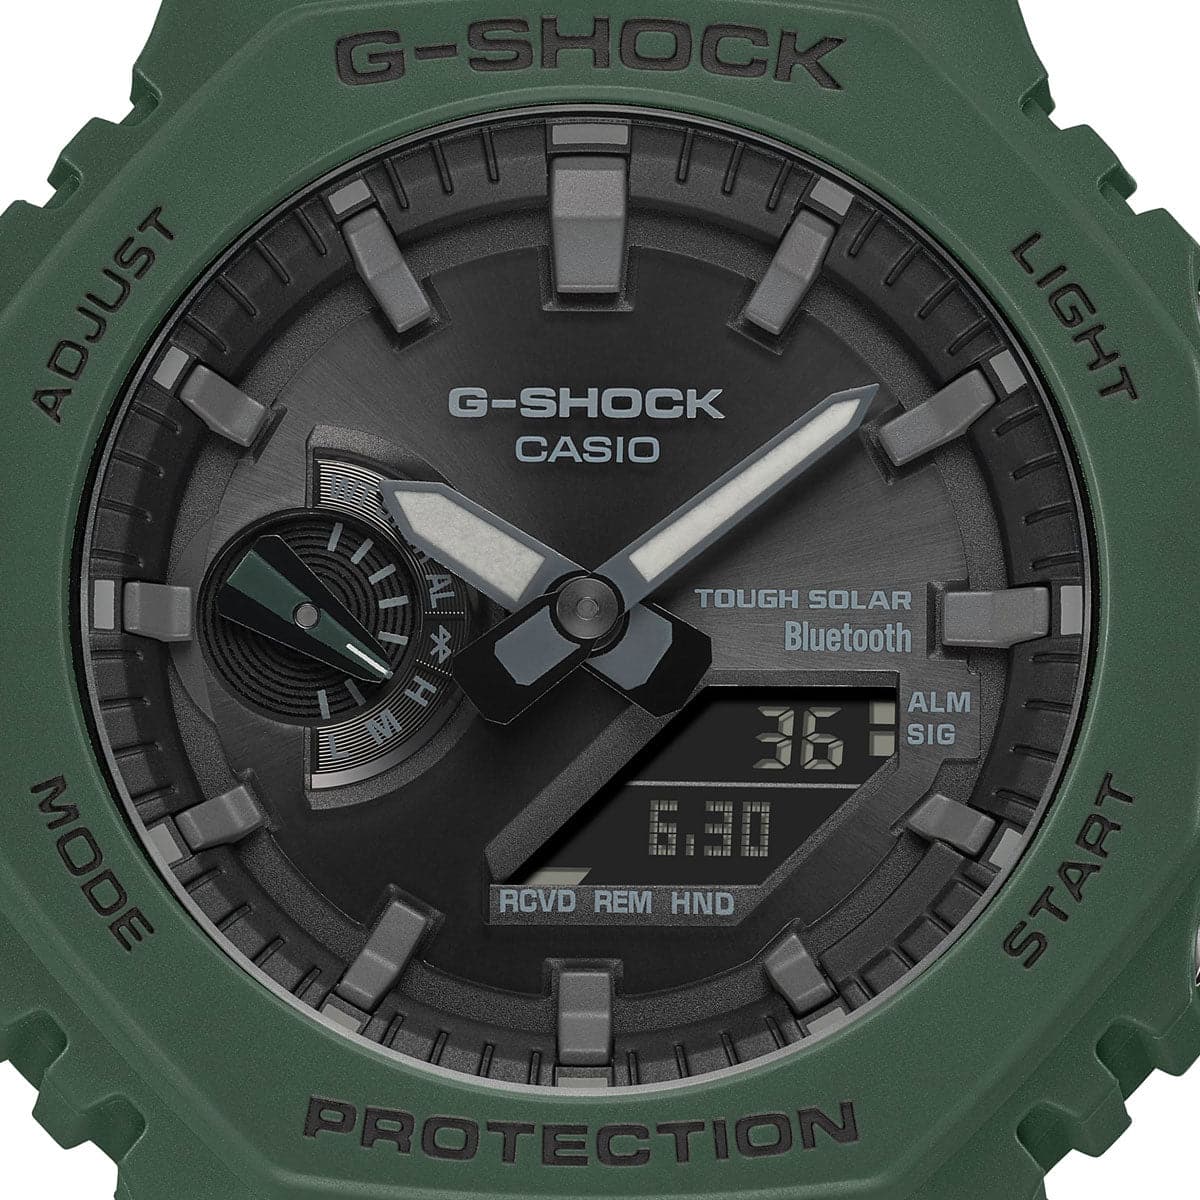 Casio G-Shock GA-B2100-3AER (Grün)  - Allike Store